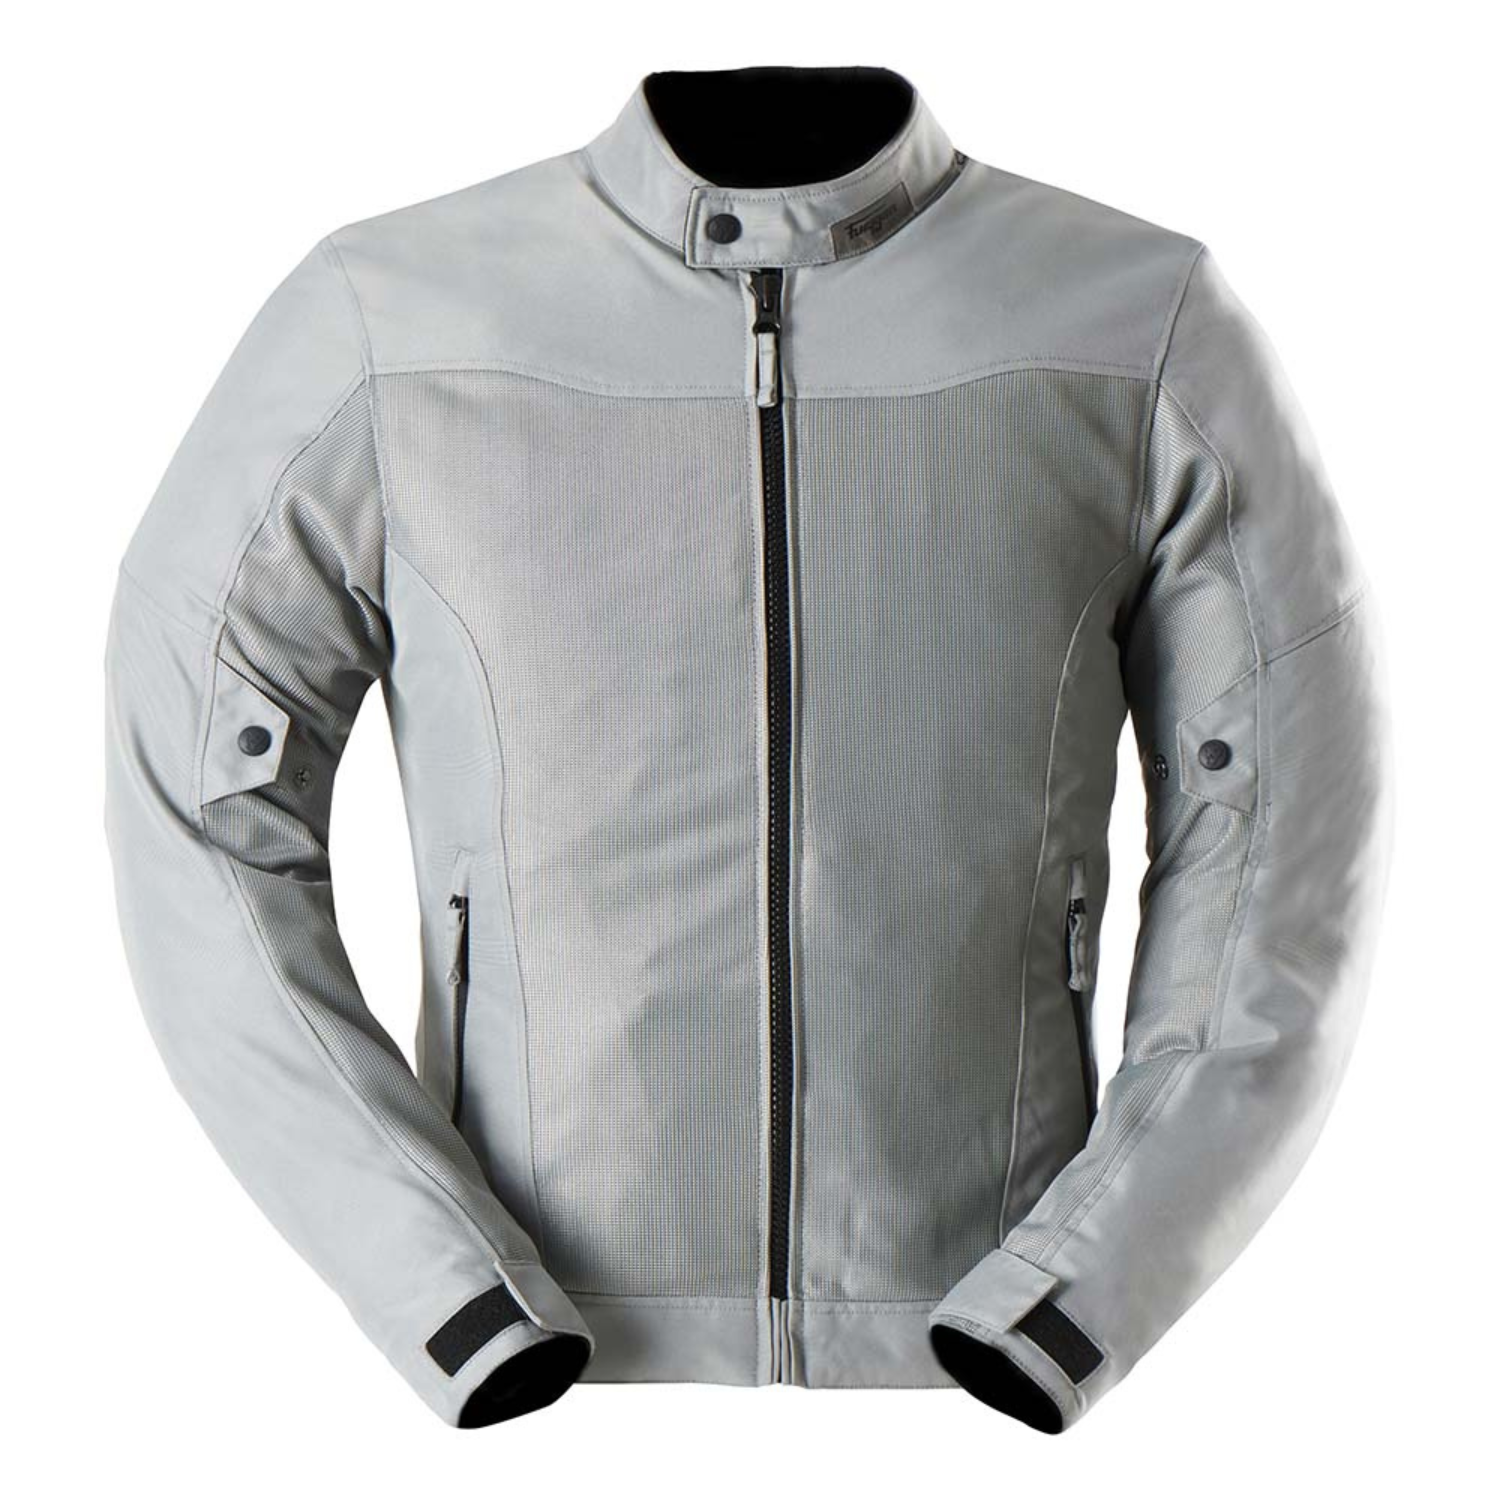 Image of Furygan Mistral Evo 3 Jacket Grey Size XL ID 3435980362683